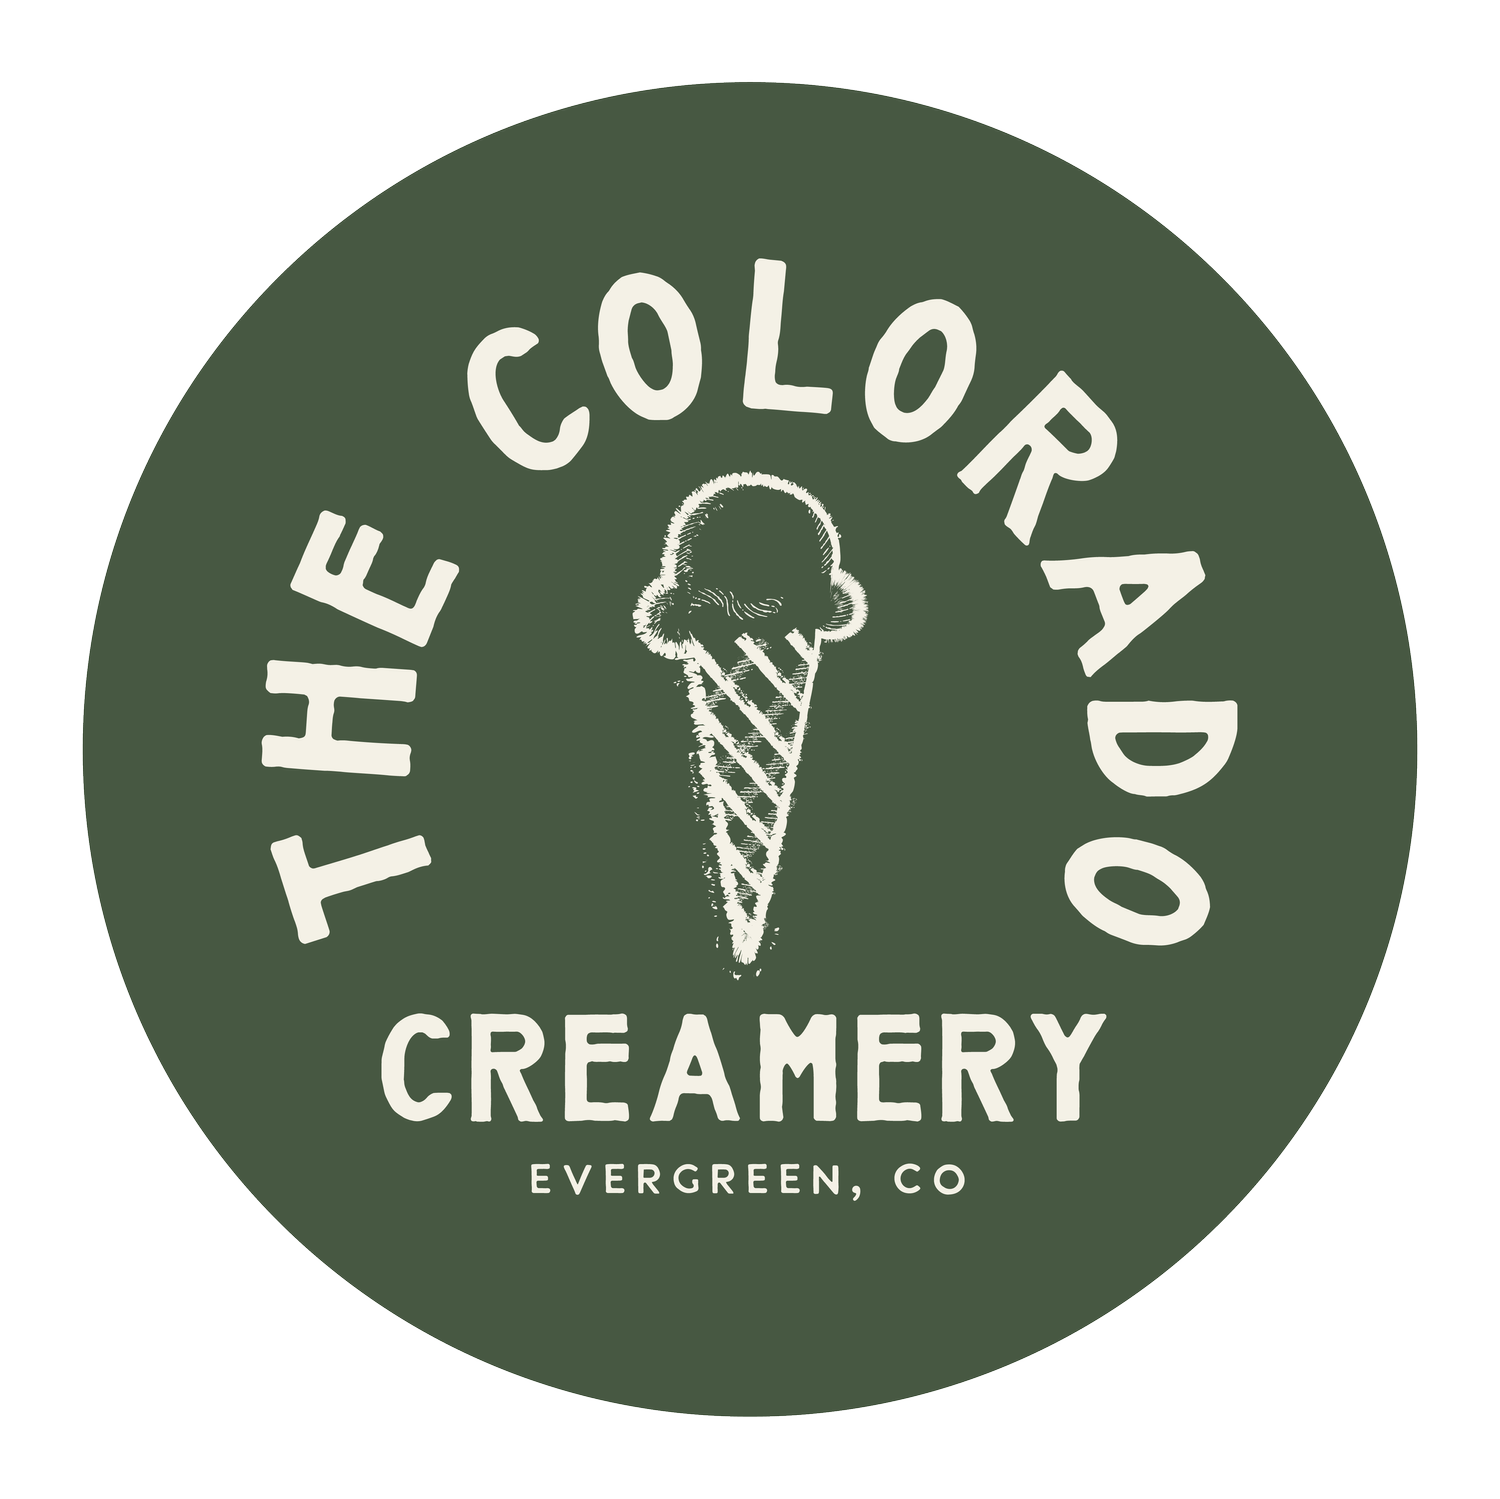 The Colorado Creamery